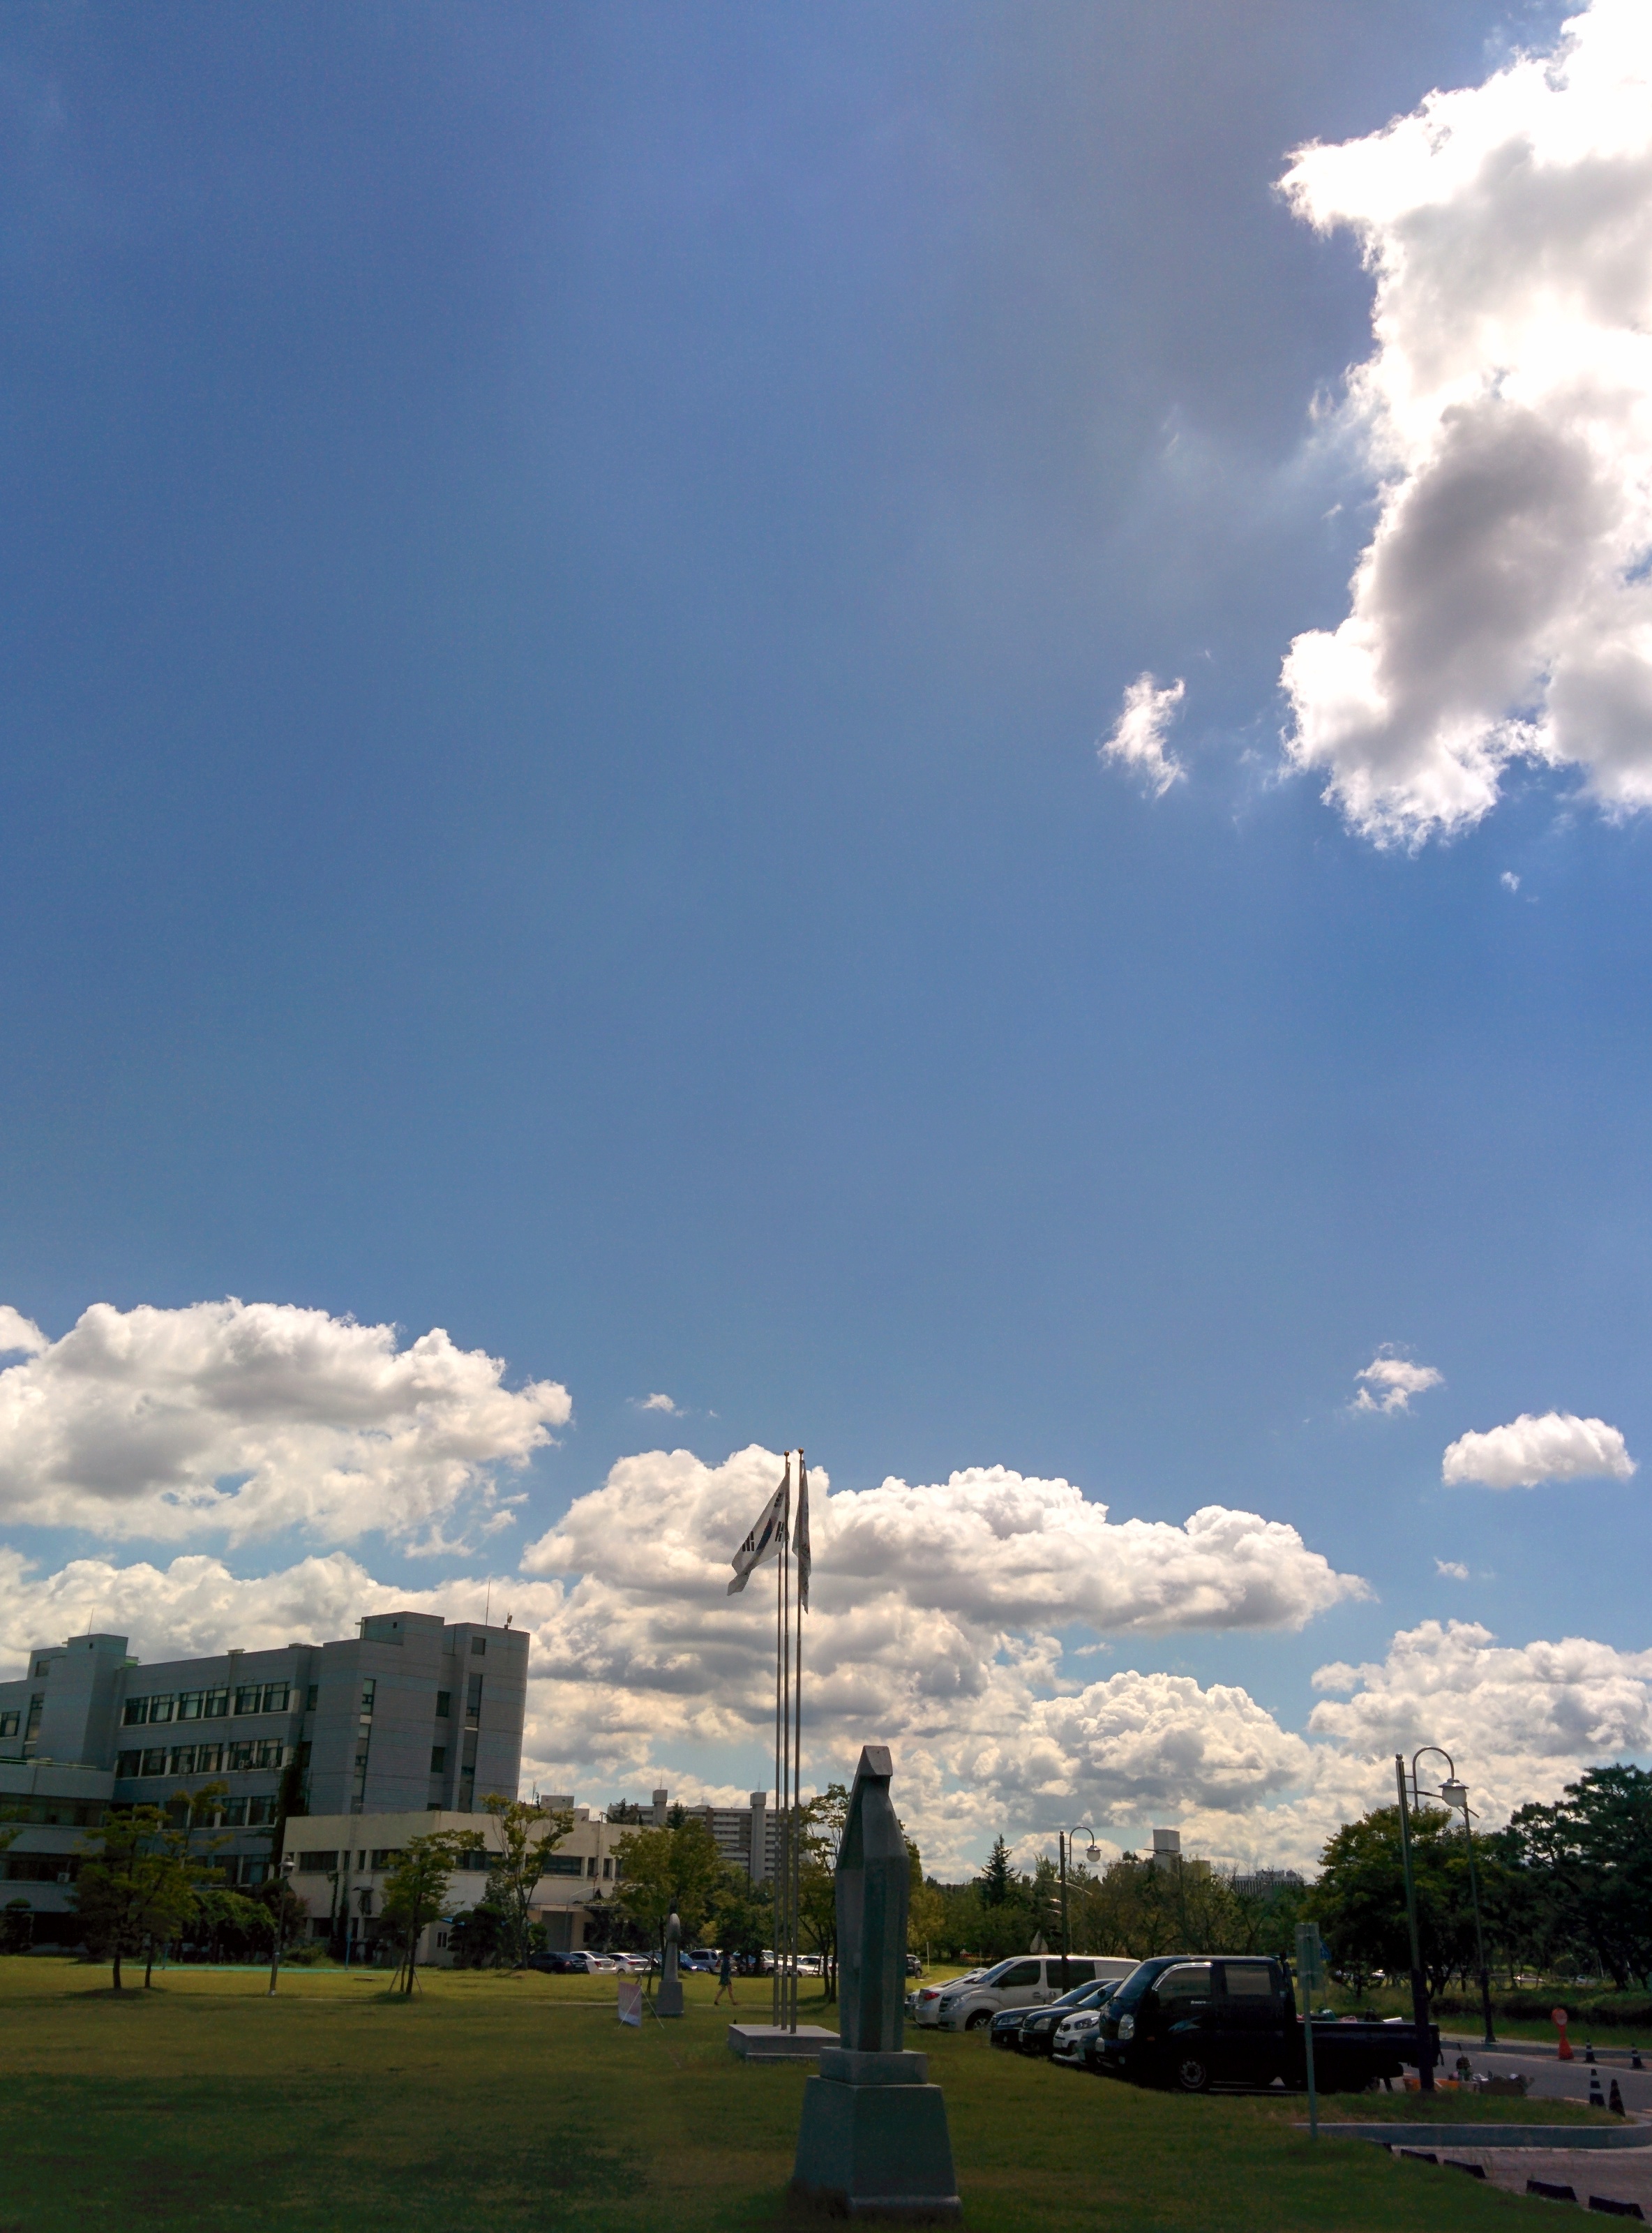 IMG_20150826_123308.jpg 구름이 선명한 완연한 가을하늘